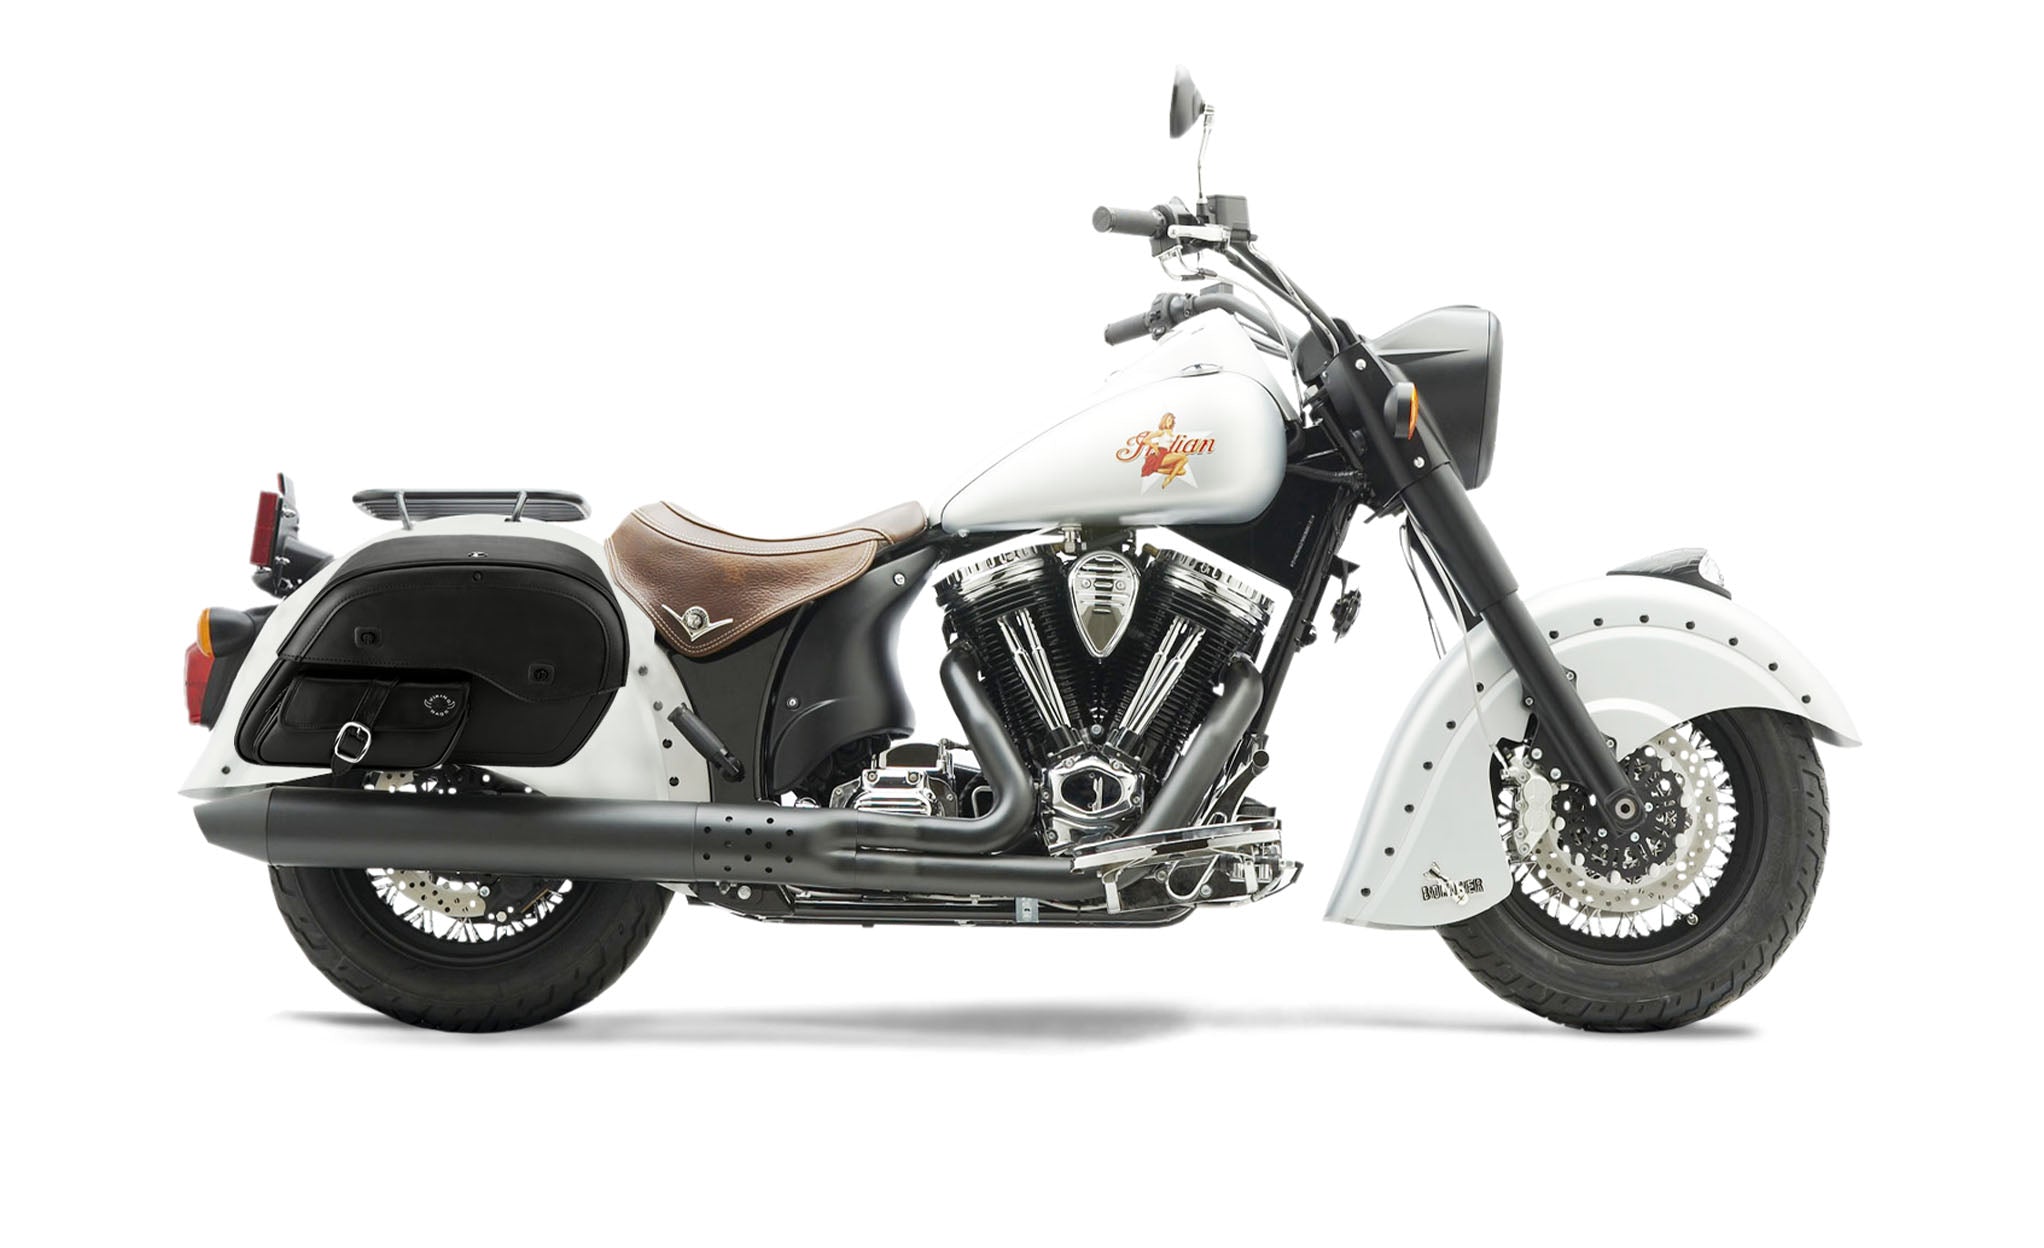 Viking Essential Side Pocket Large Indian Chief Bomber Leather Motorcycle Saddlebags on Bike Photo @expand